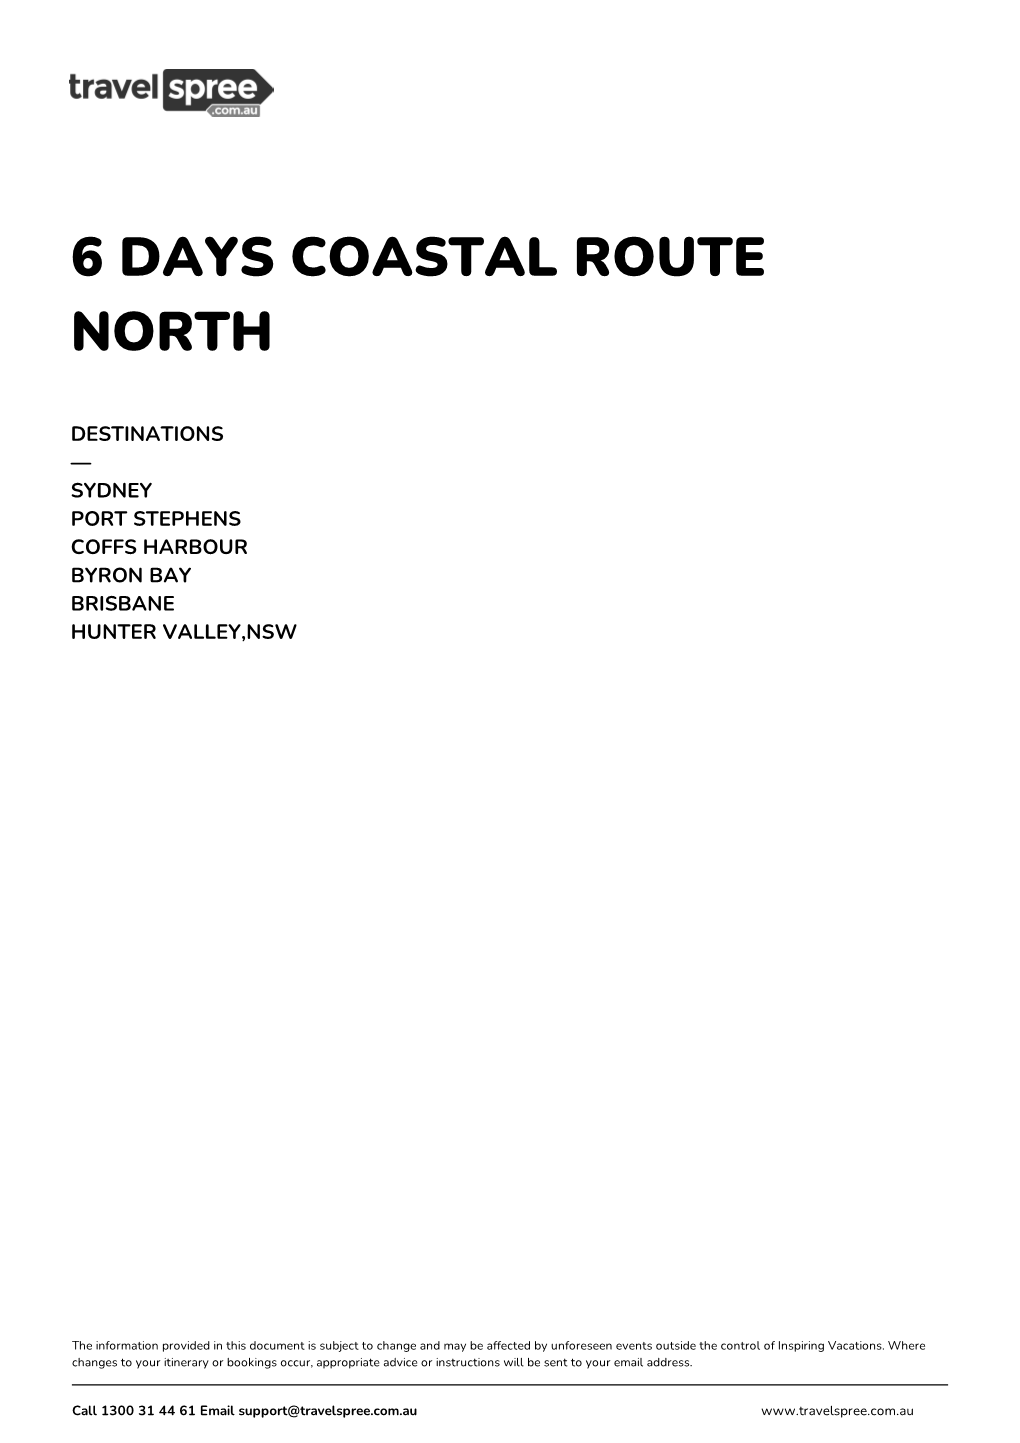 6 Days Coastal Route North